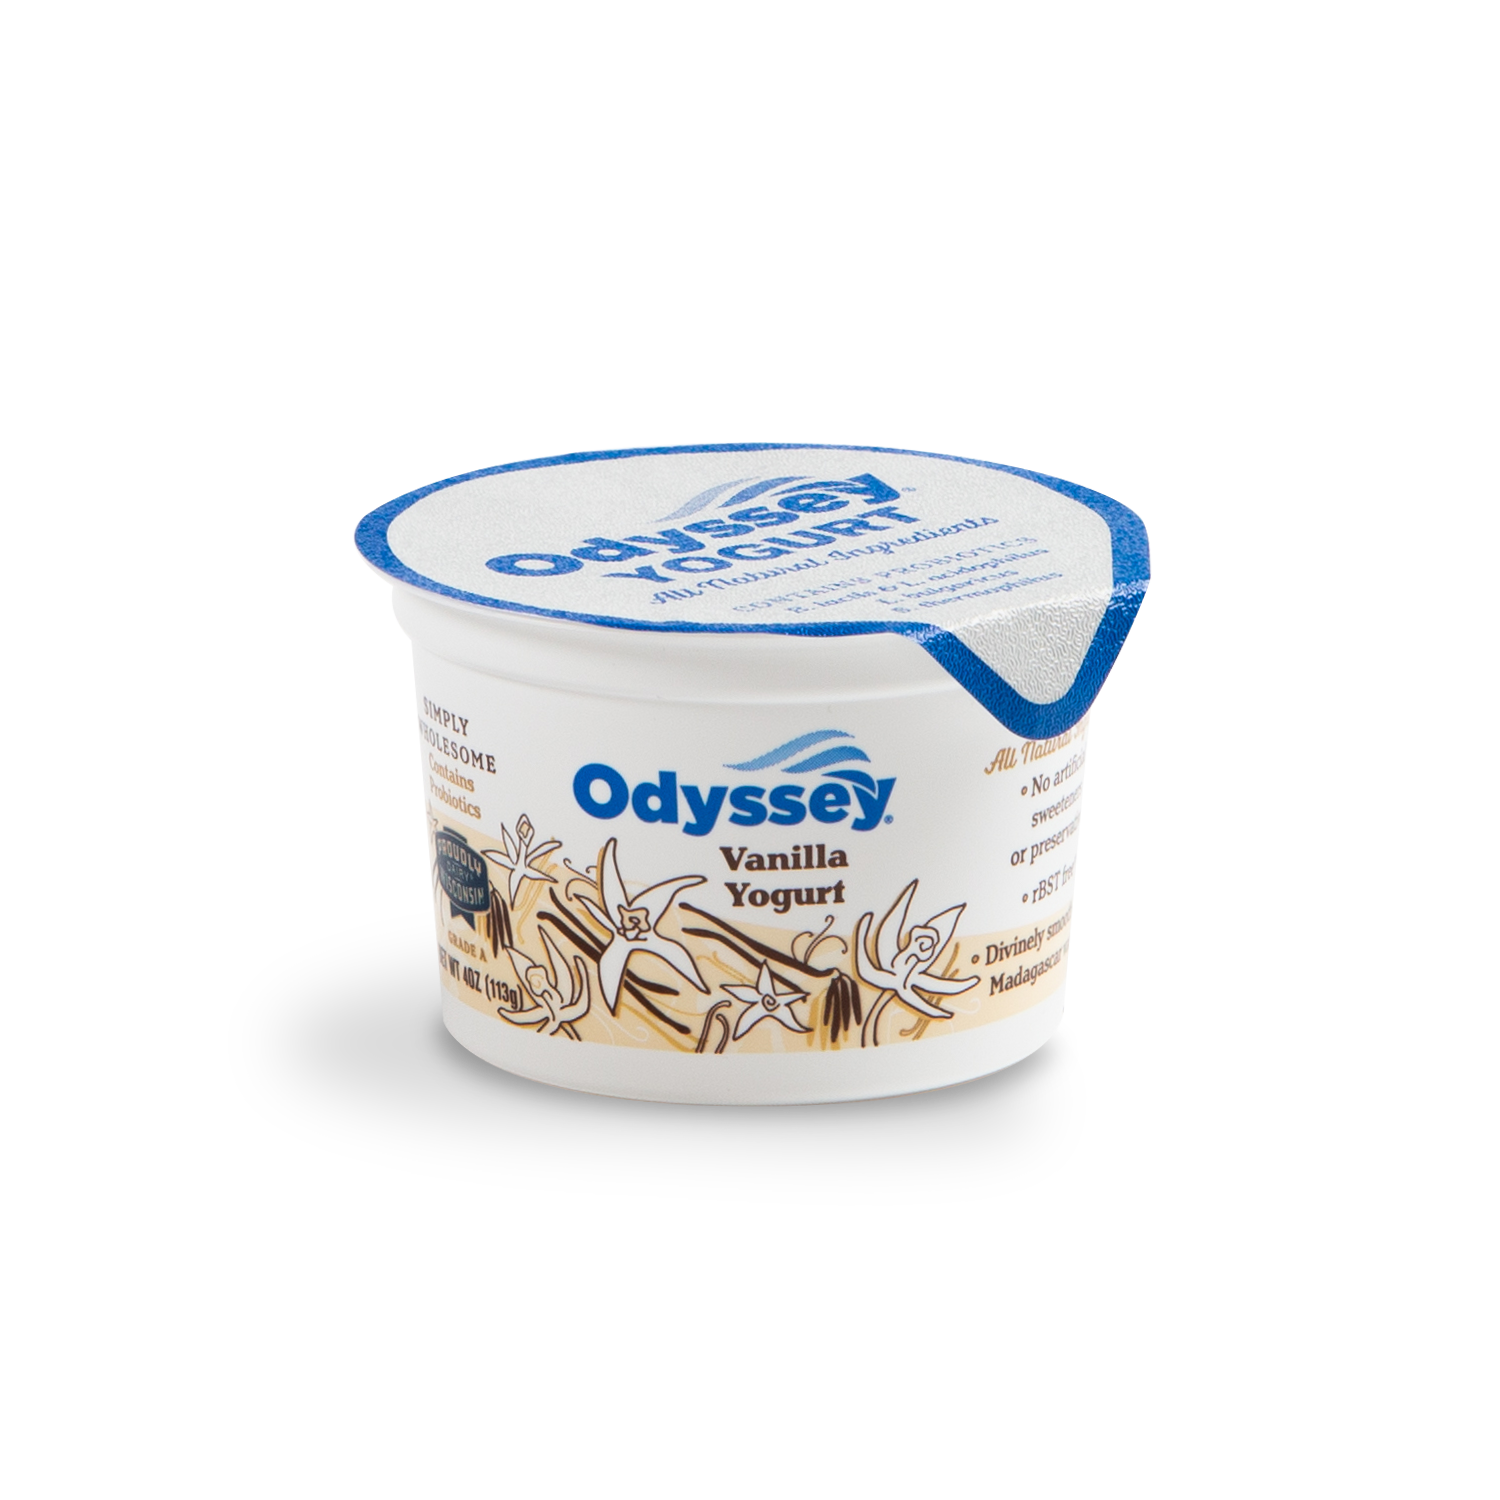 Odyssey Brands Products Vanilla Greek Yogurt 4oz no Fruit